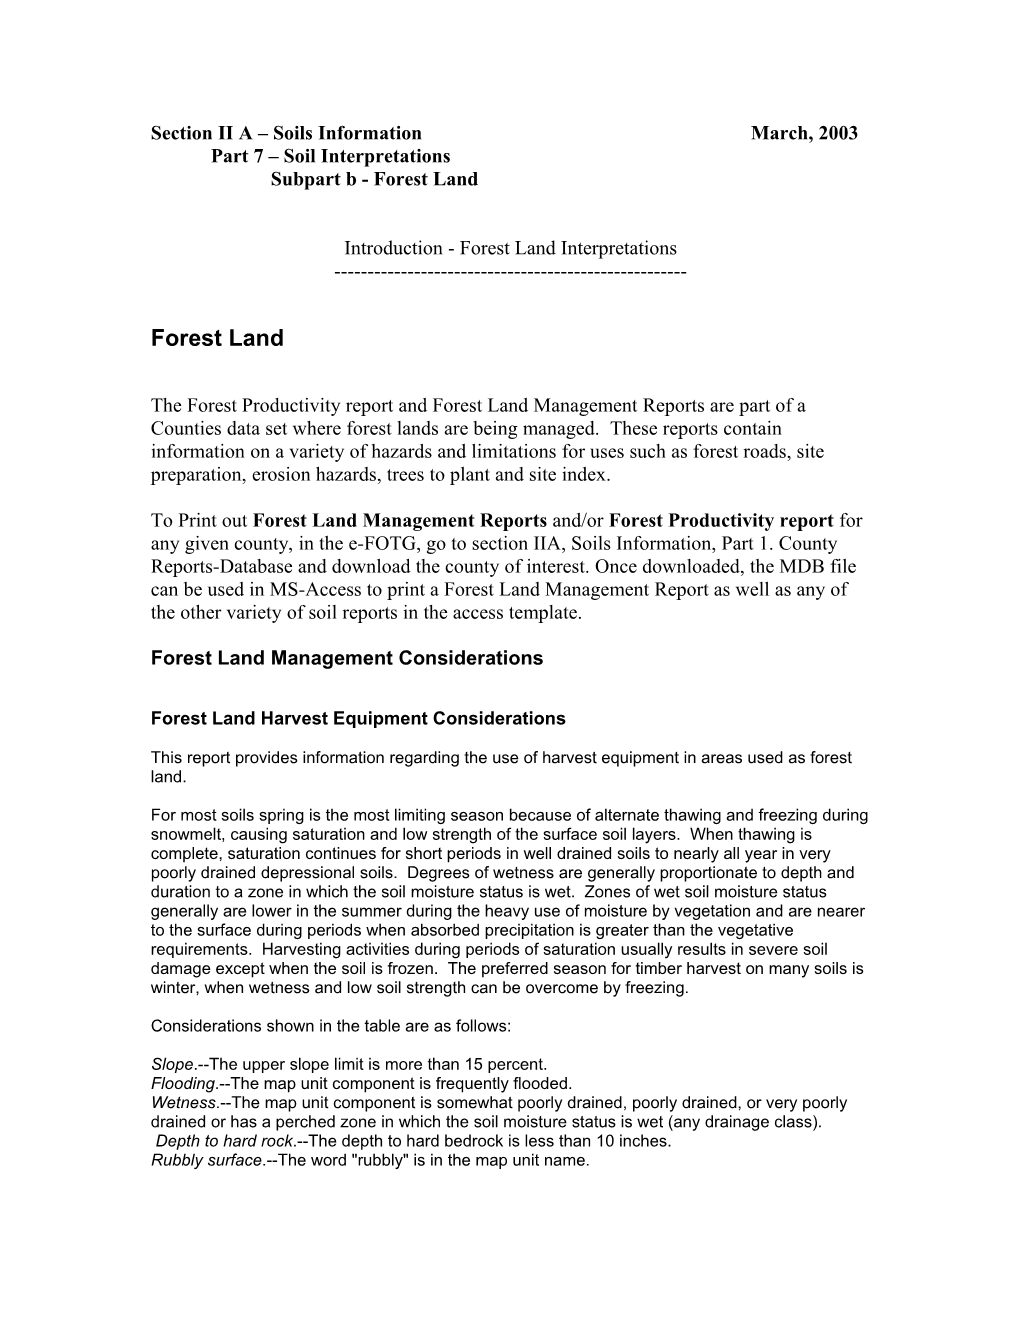 Section II a - Forest Land Interpretations